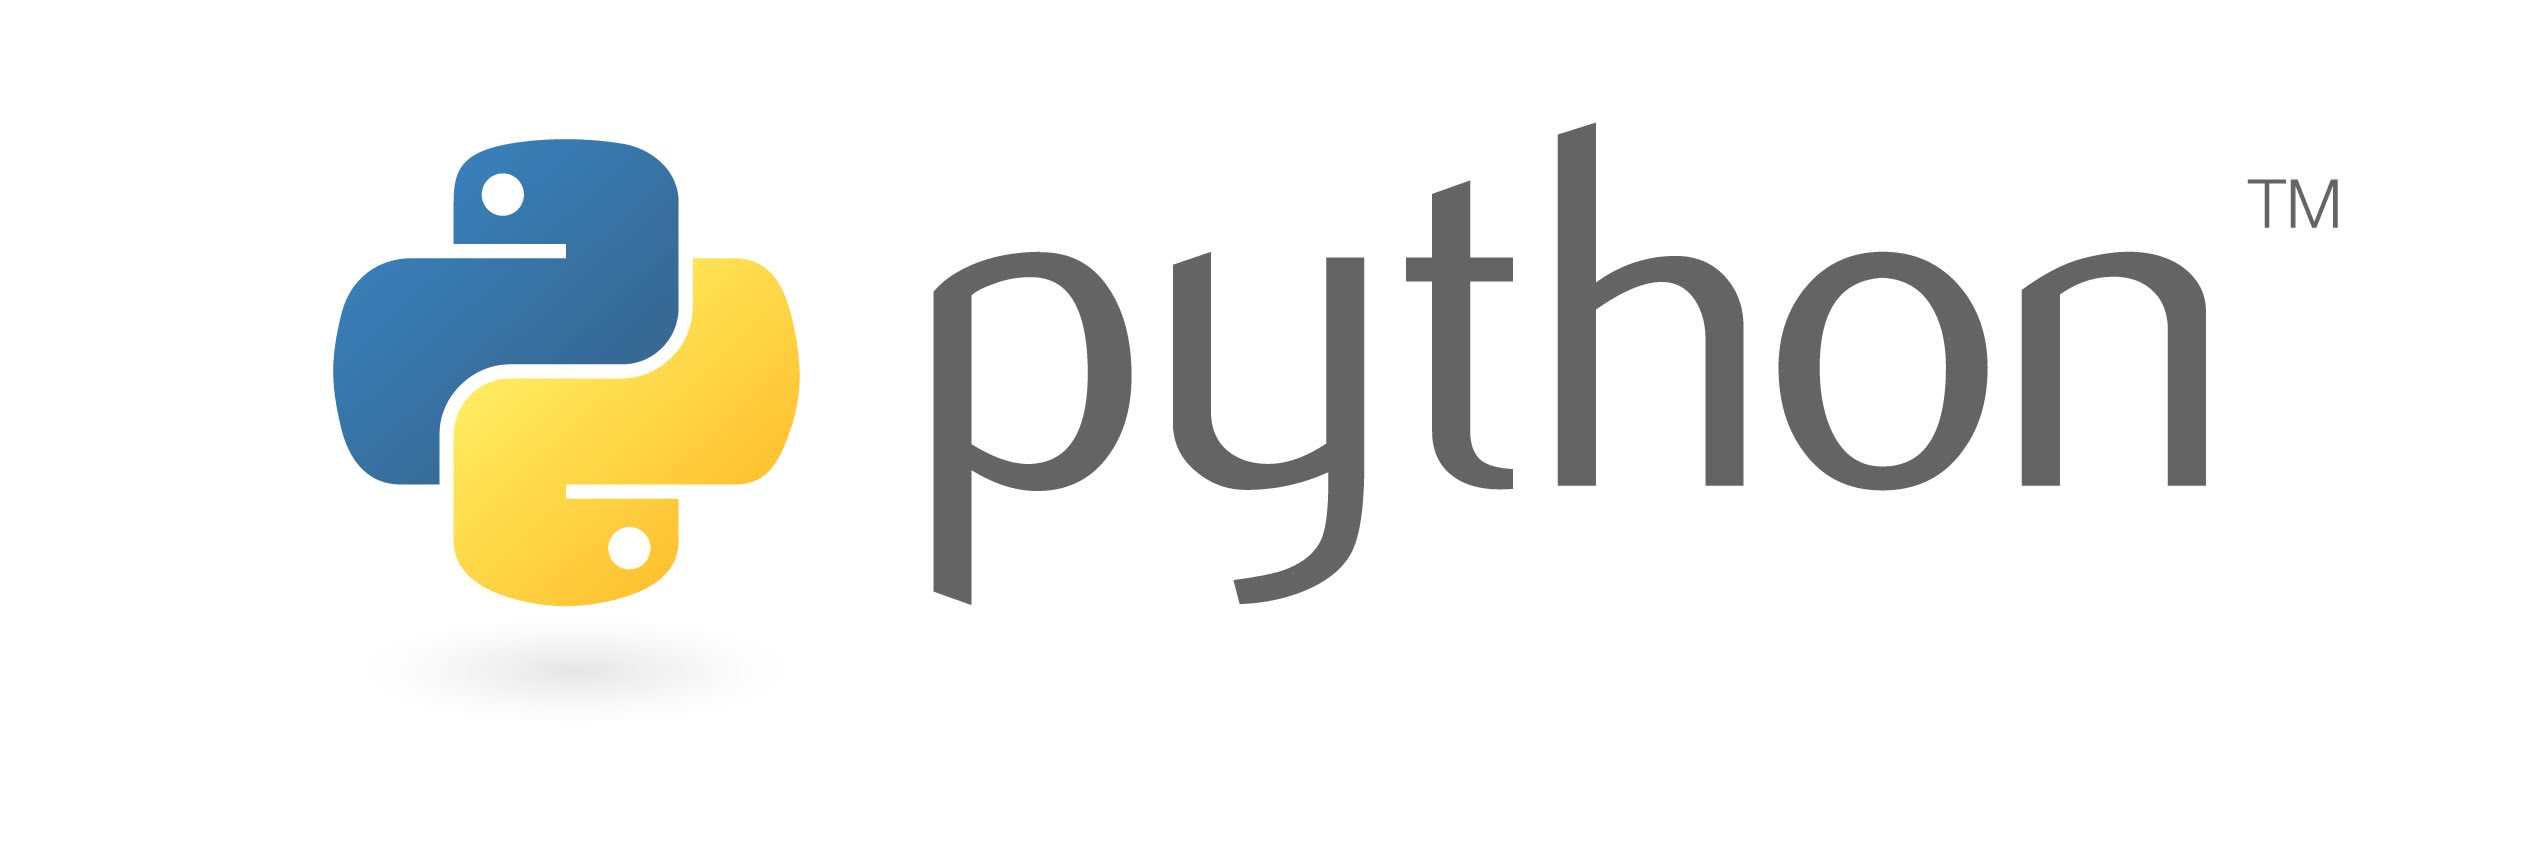 Image result for python logo